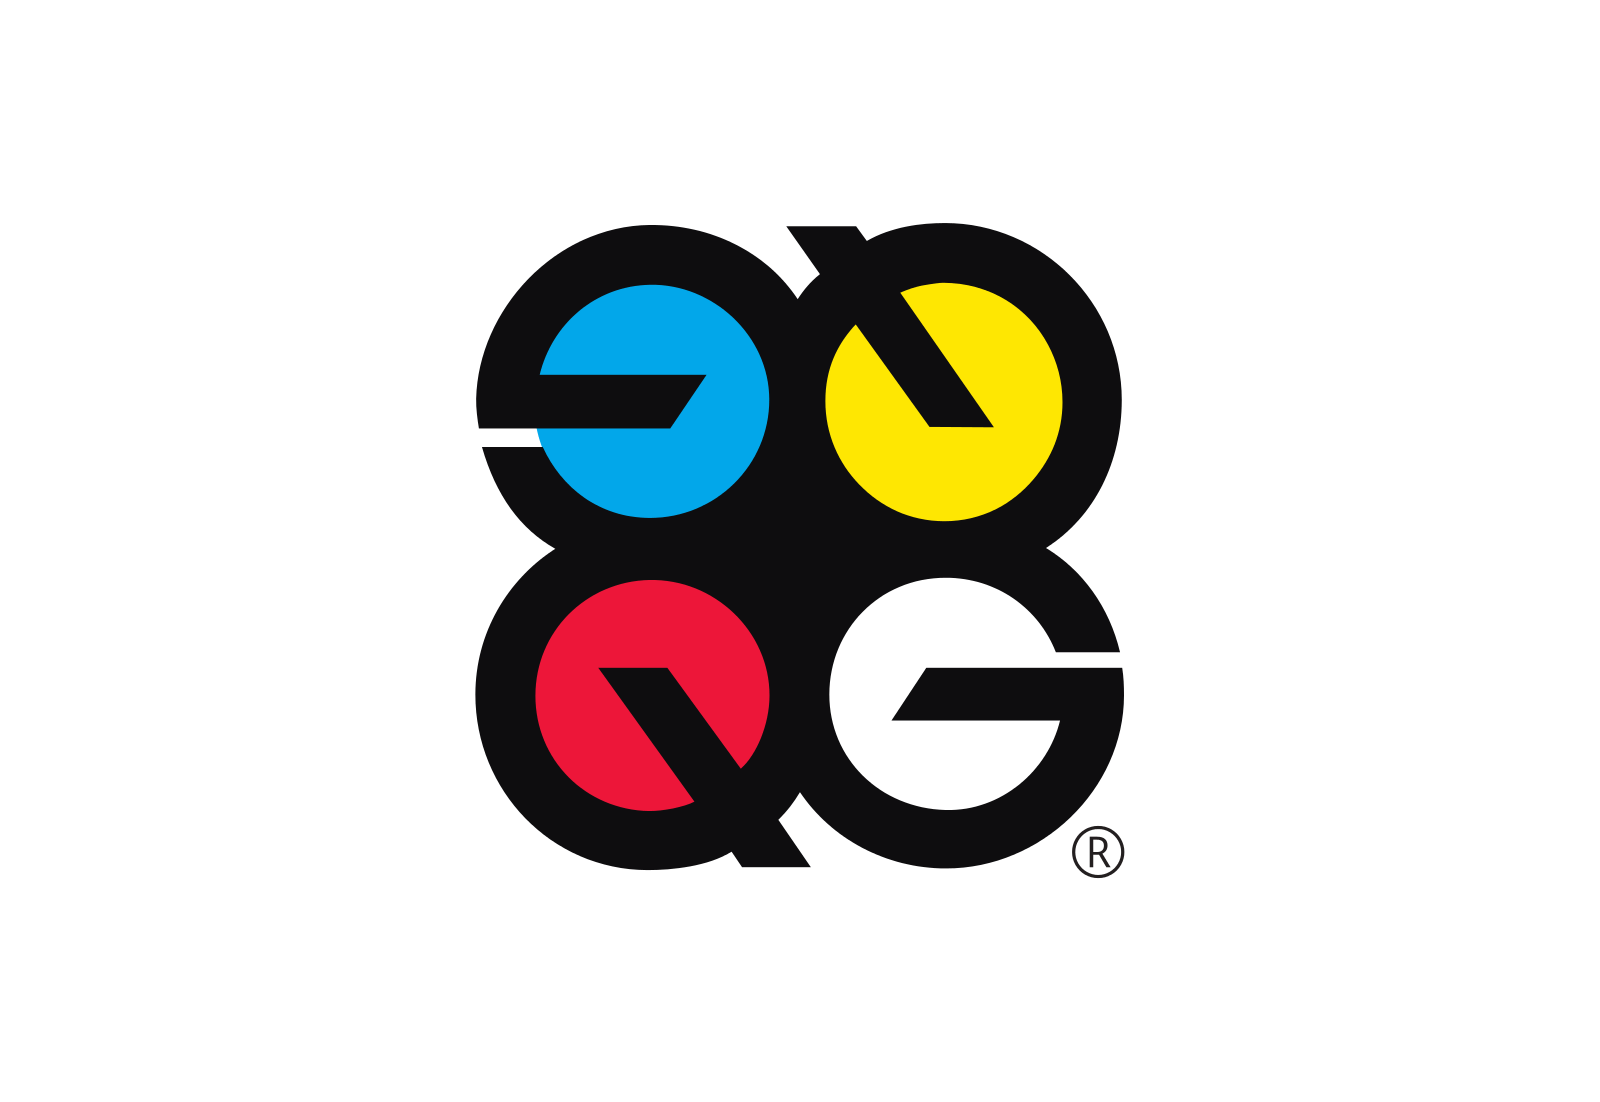 Quad Logo - Quad/Graphics logo | Dwglogo